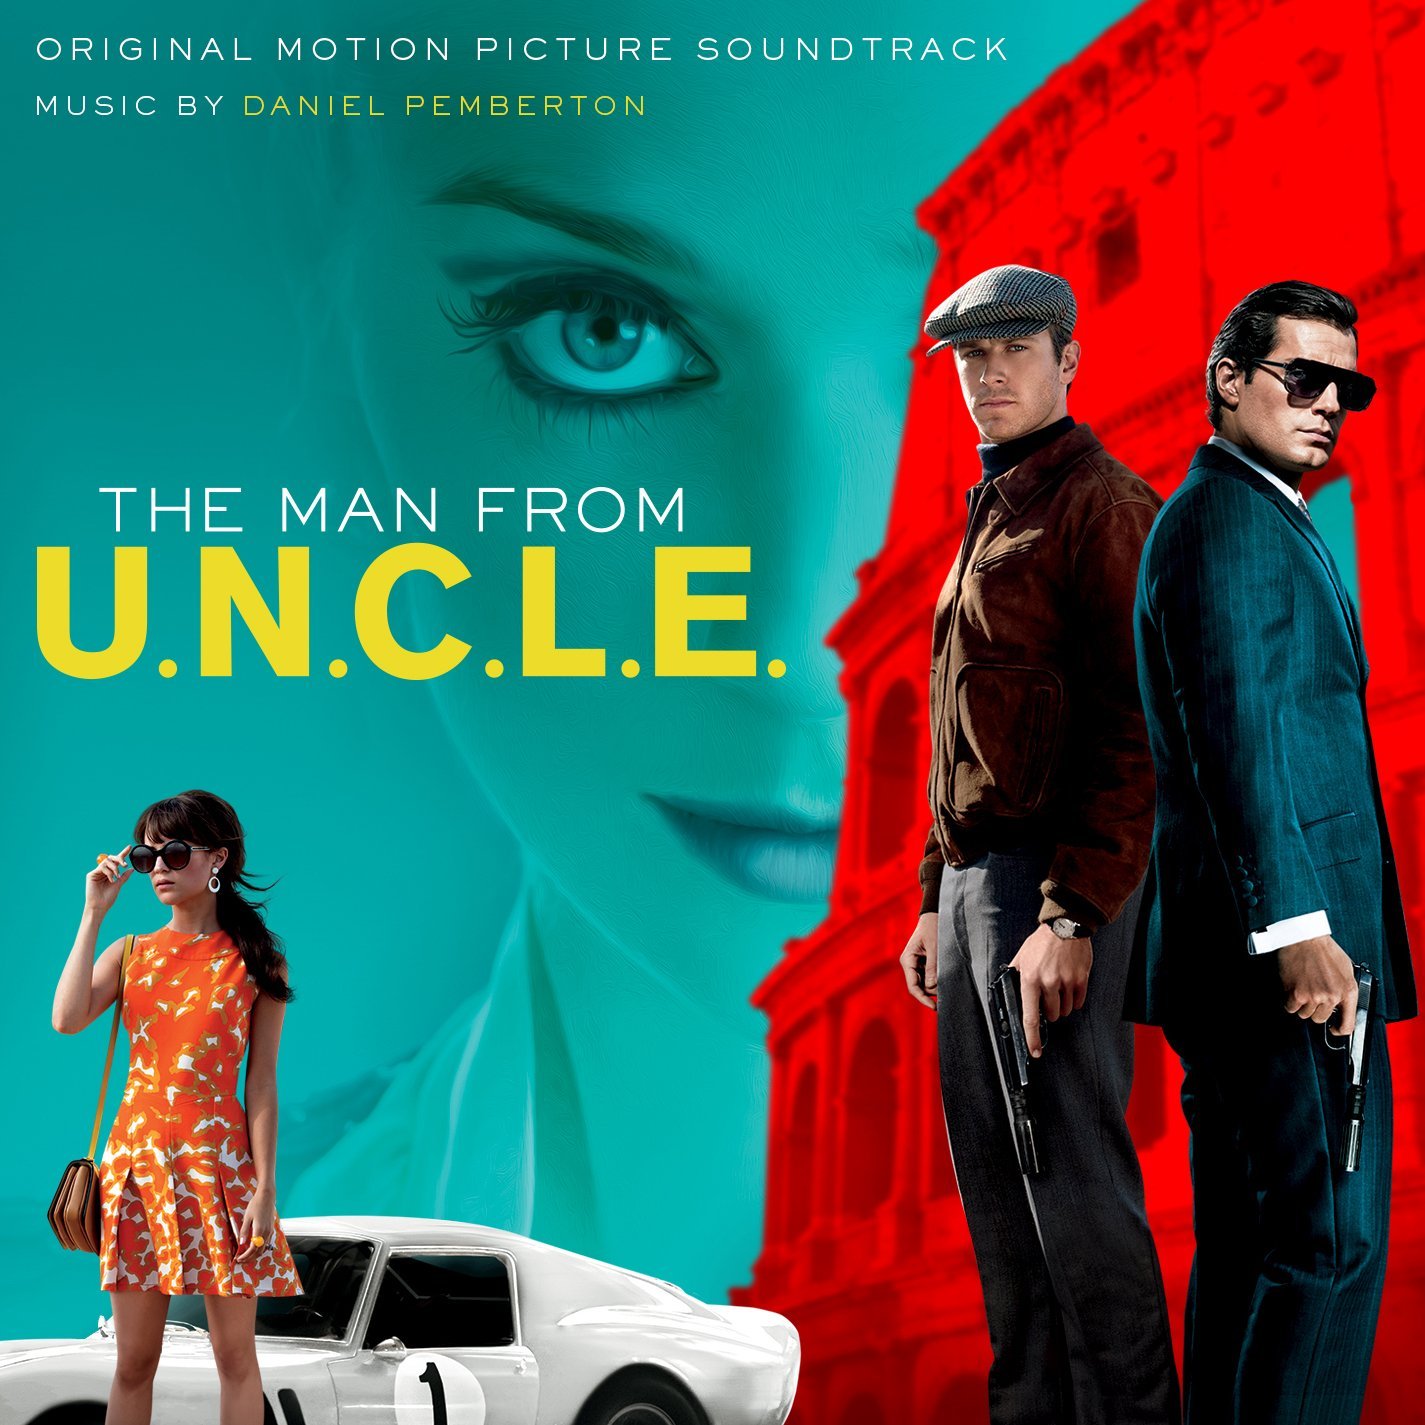 THE MAN FROM U.N.C.L.E. Soundtrack (Daniel Pemberton) The